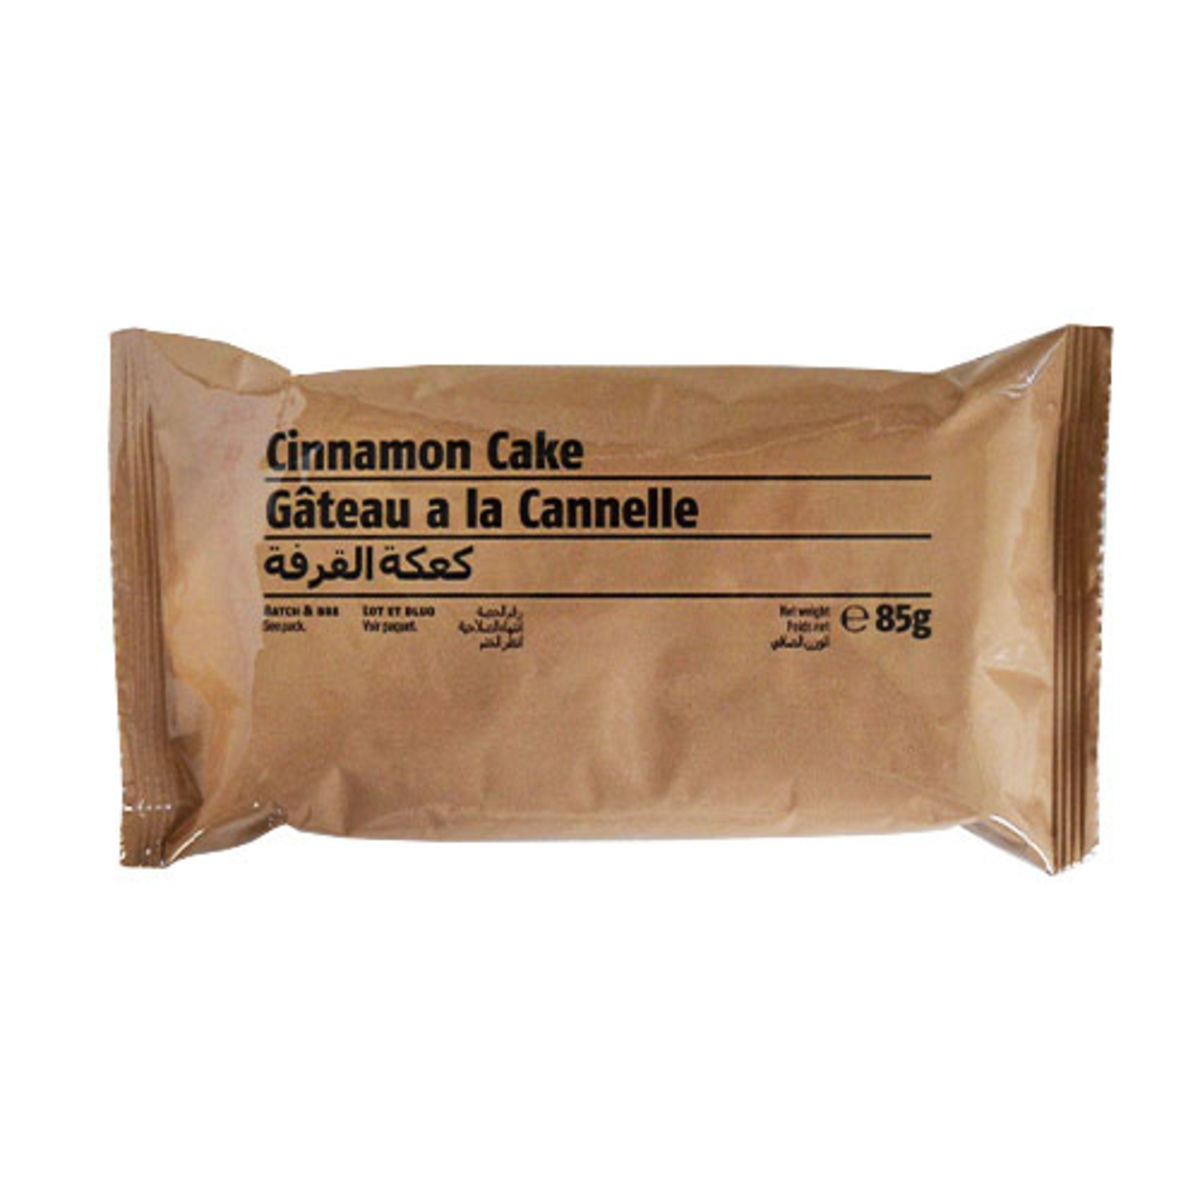 Cinnamon cake